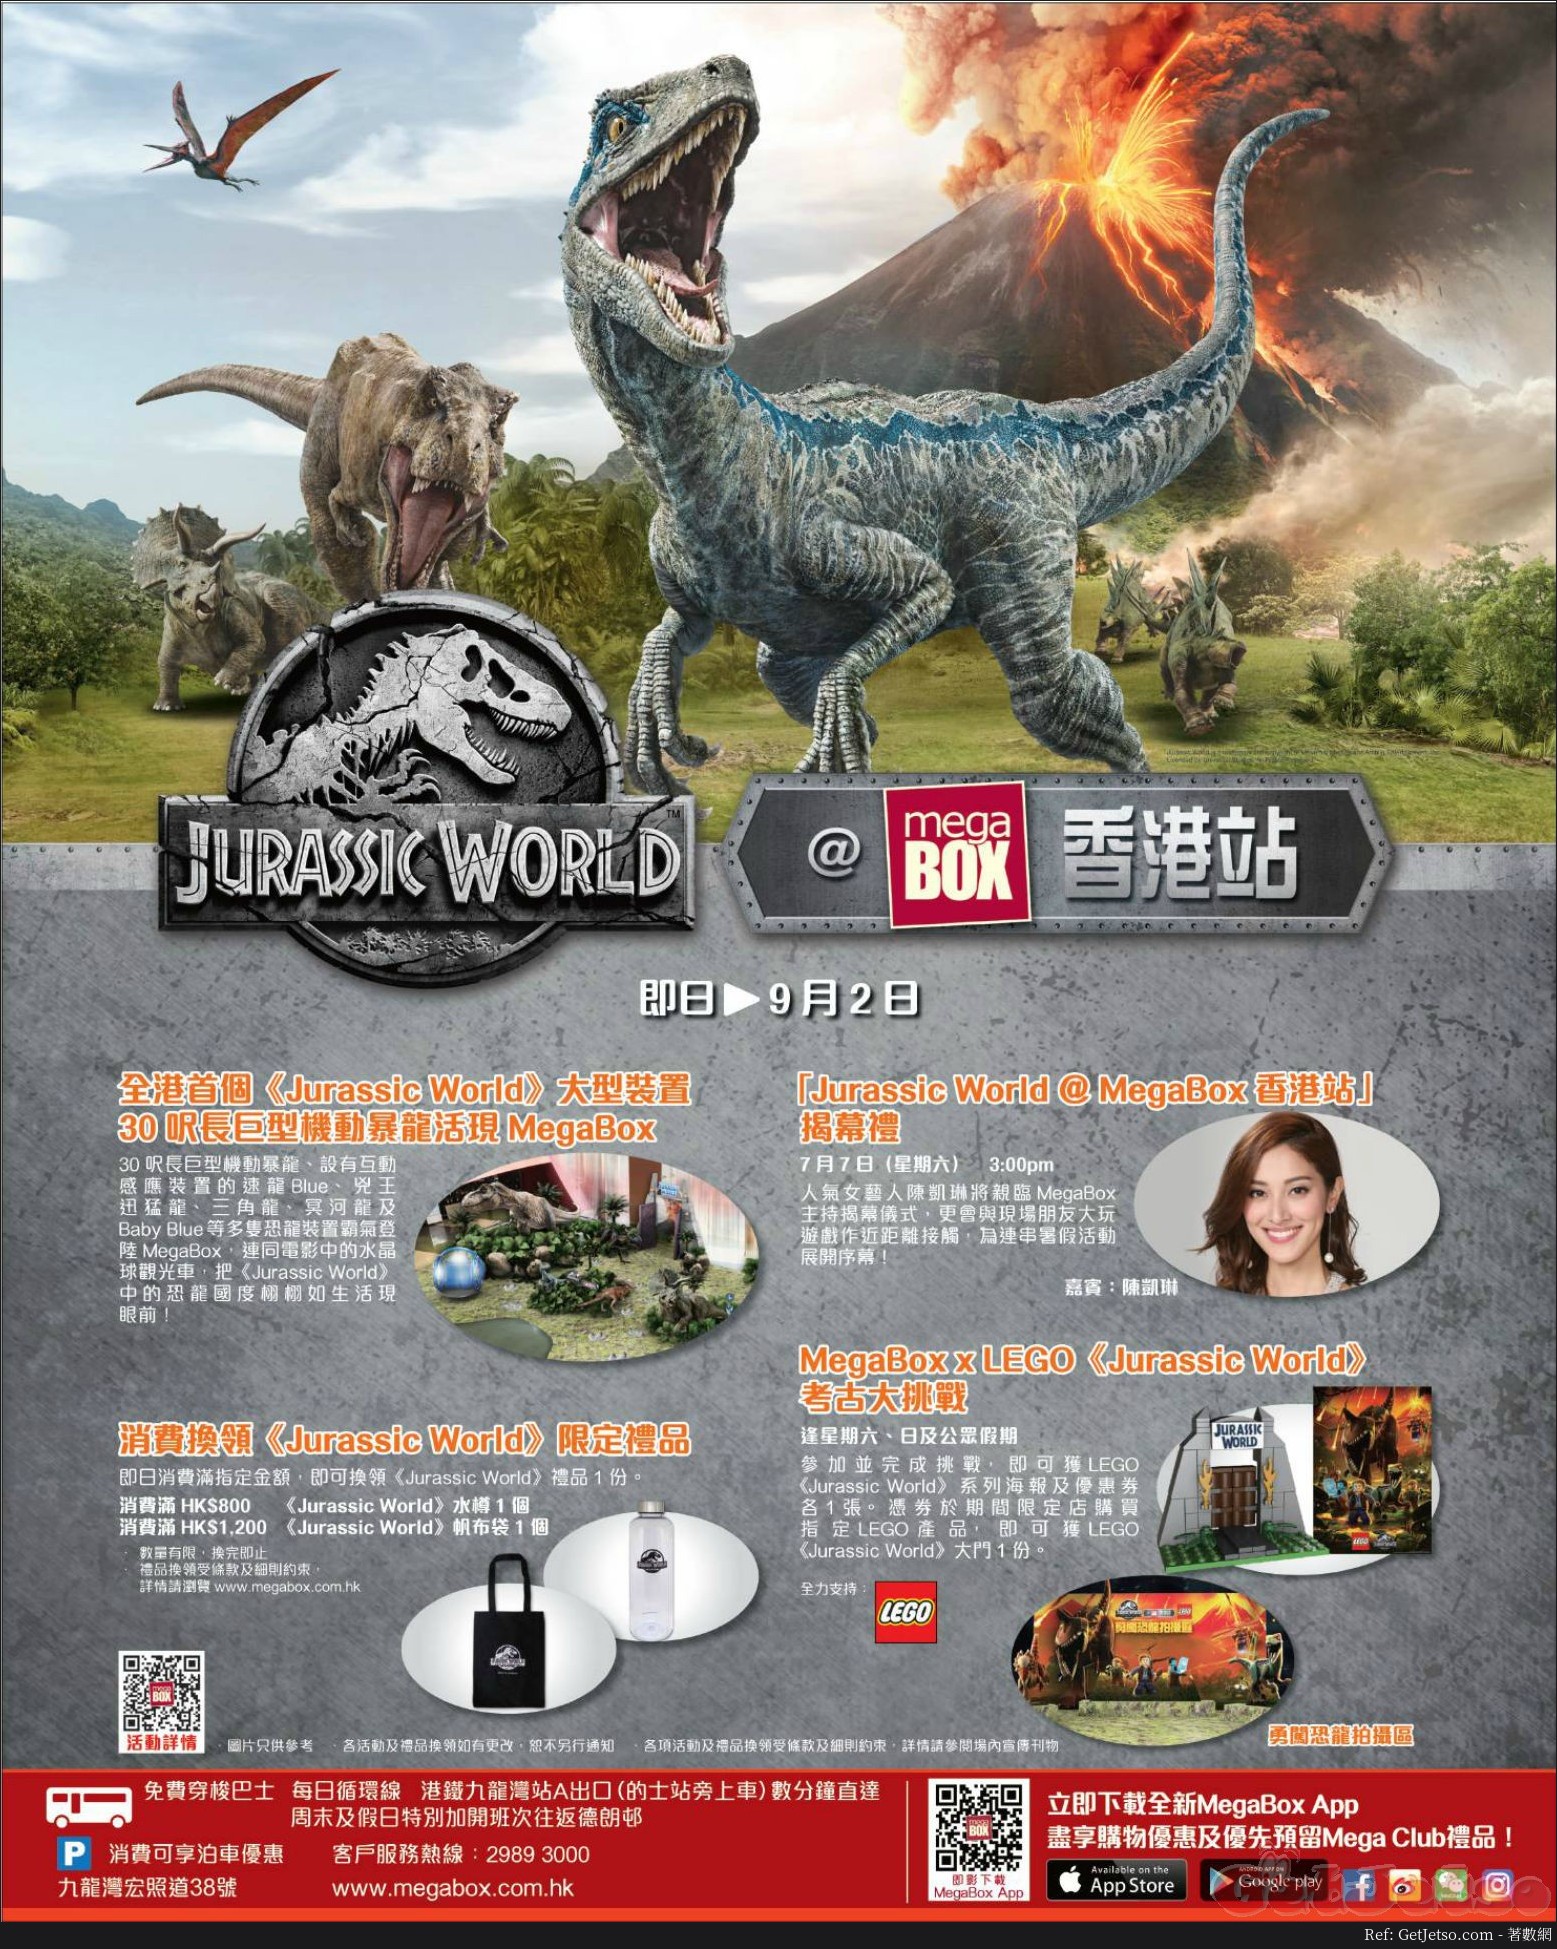 JURASSIC WORLD 侏羅紀世界展覽@mega box(至18年9月2日)圖片1